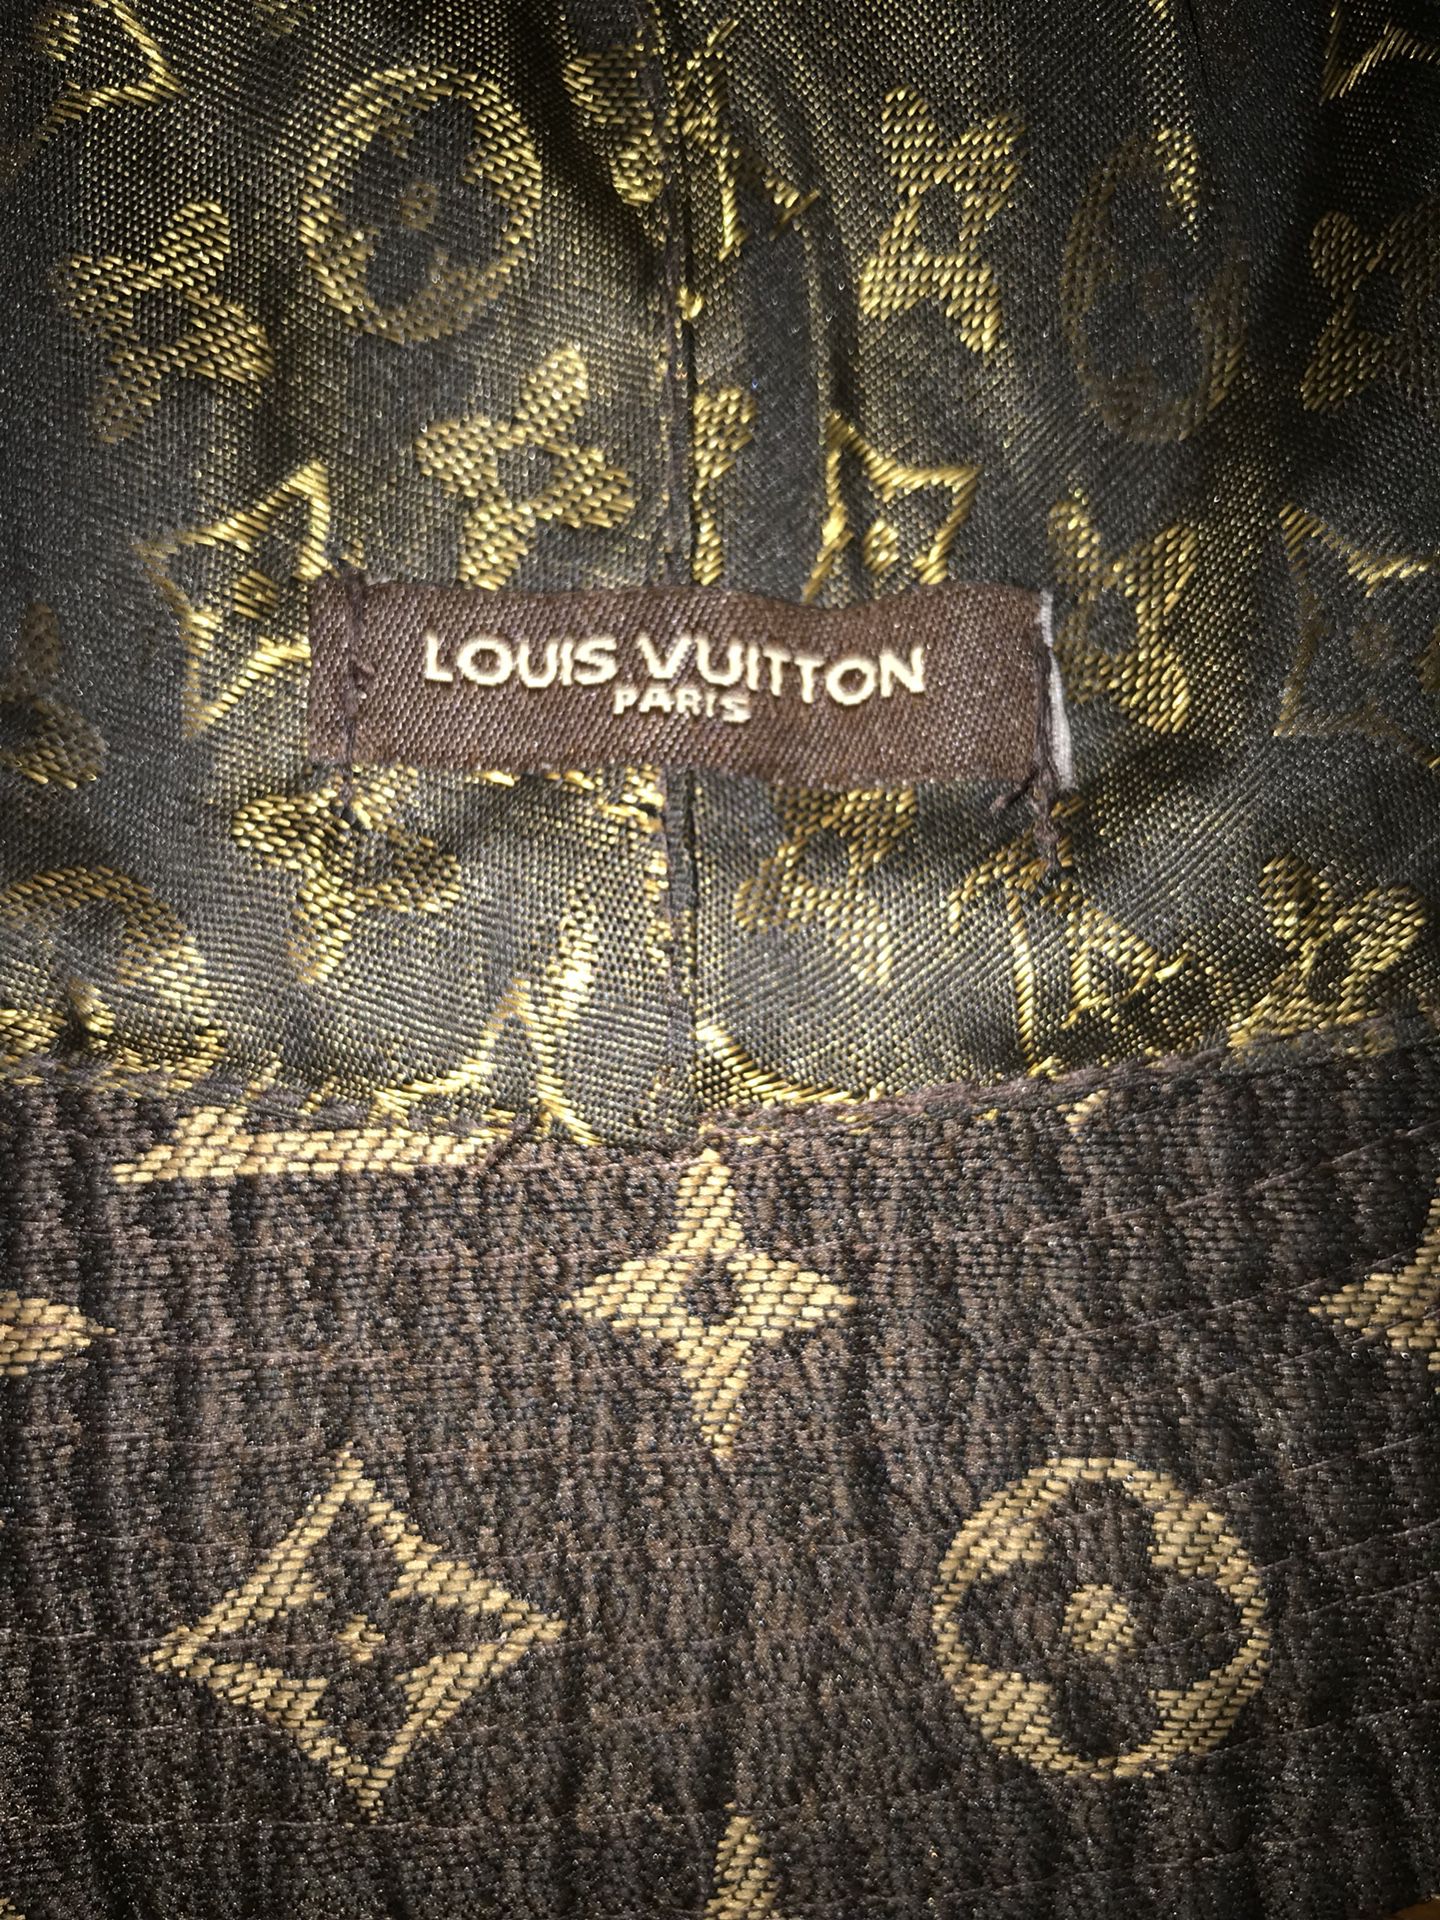 Louis Vuitton Hat for Sale in Essex, MD - OfferUp